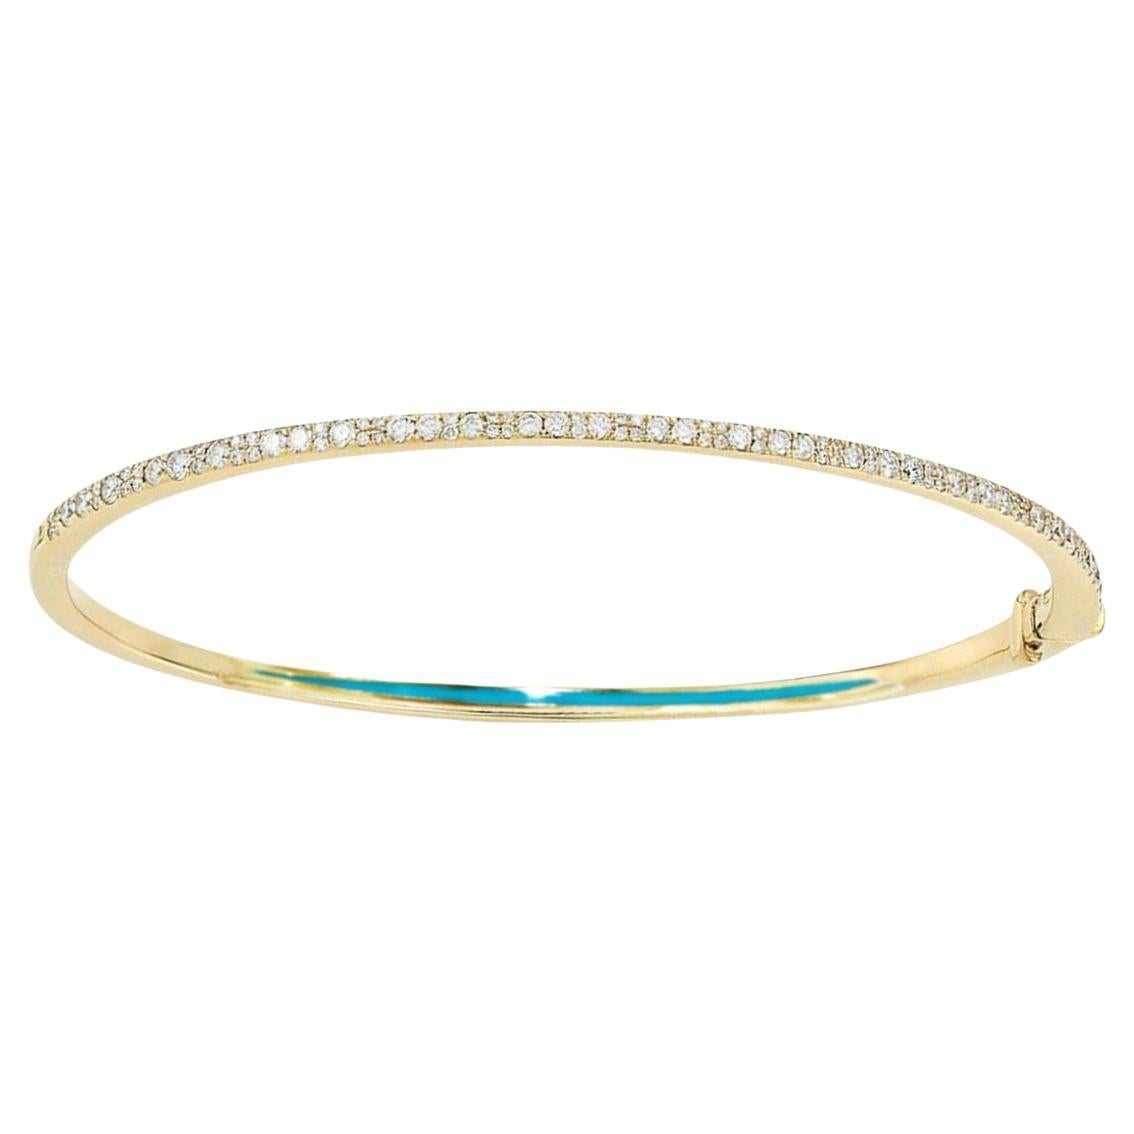 Maviada's Diamond Hinge Bracelet with Turquoise in 18k Gold